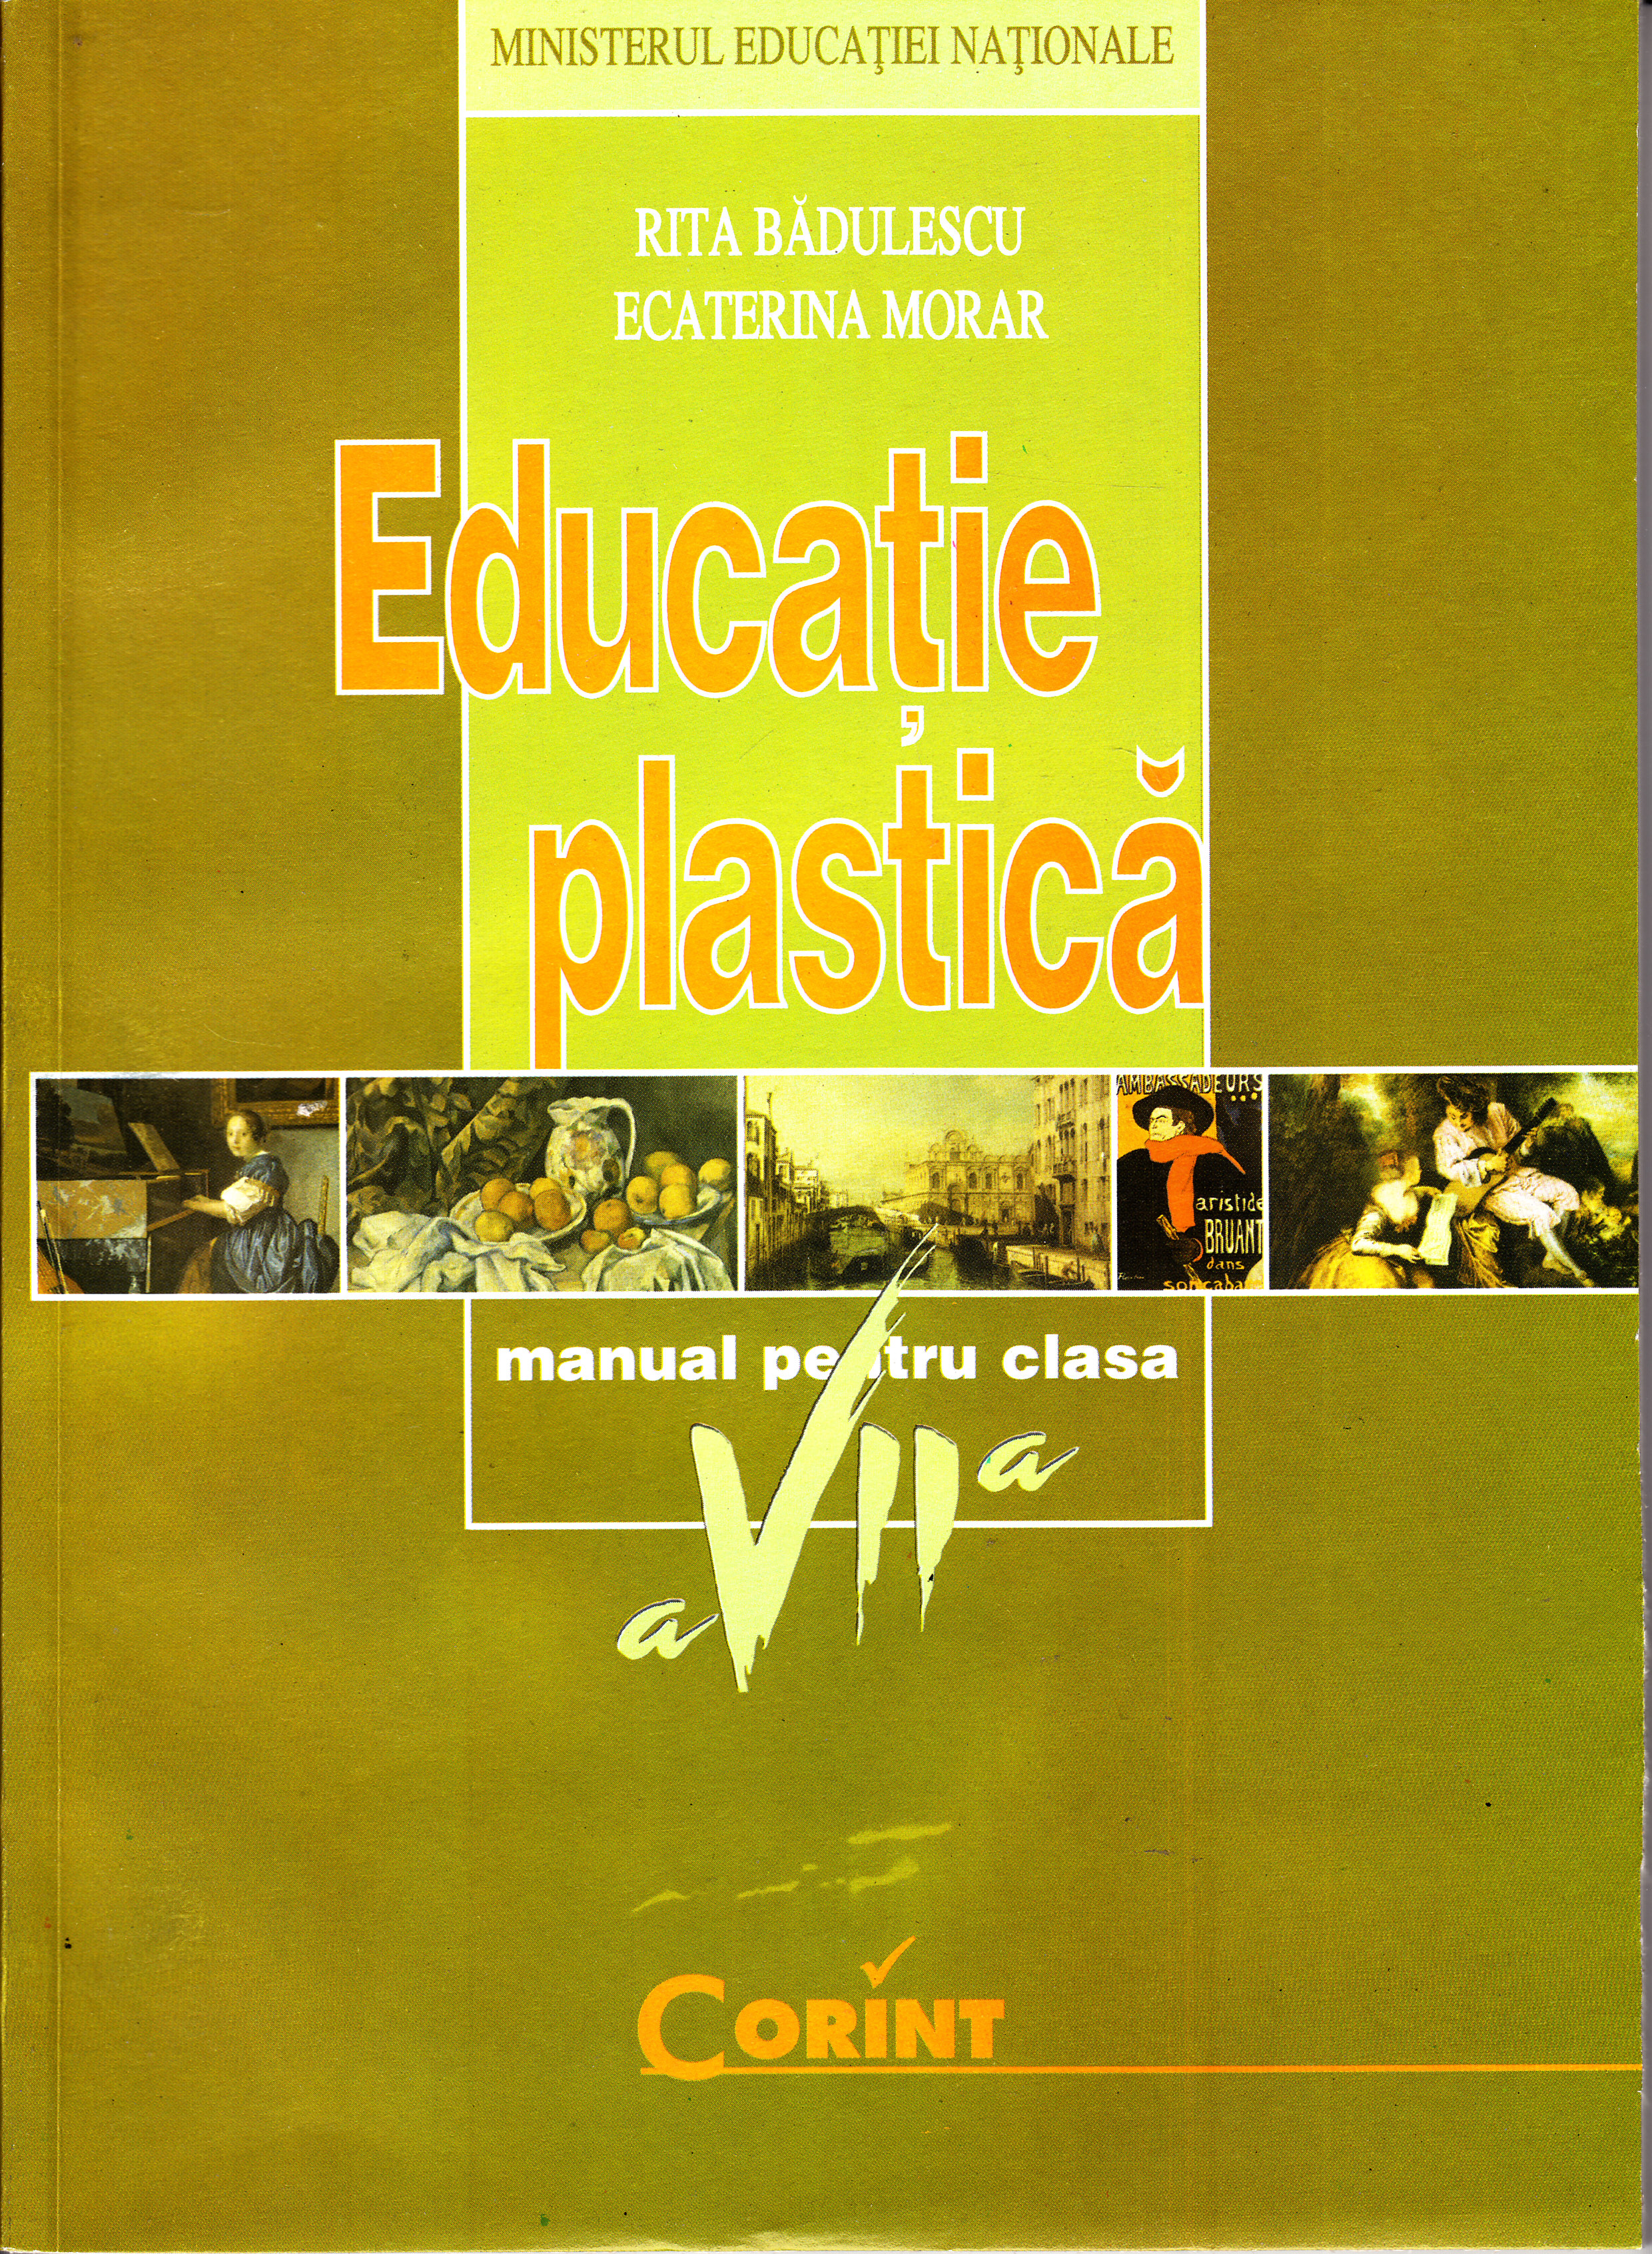 Educatie plastica - Clasa 7 - Manual - Rita Badulescu, Ecaterina Morar